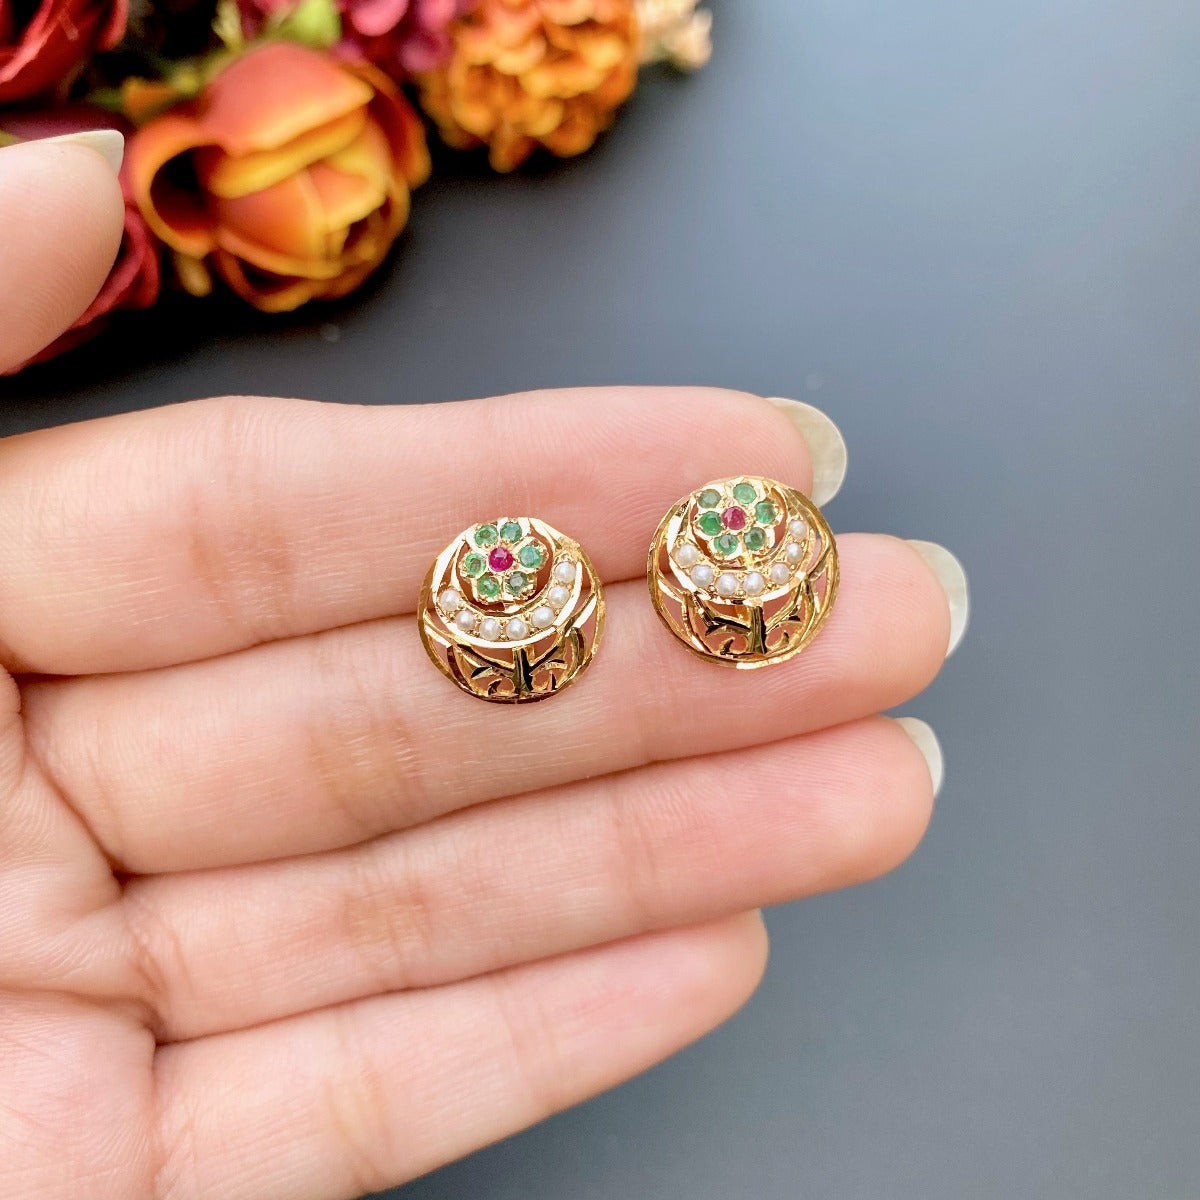 hyderabadi stud earrings in real gold